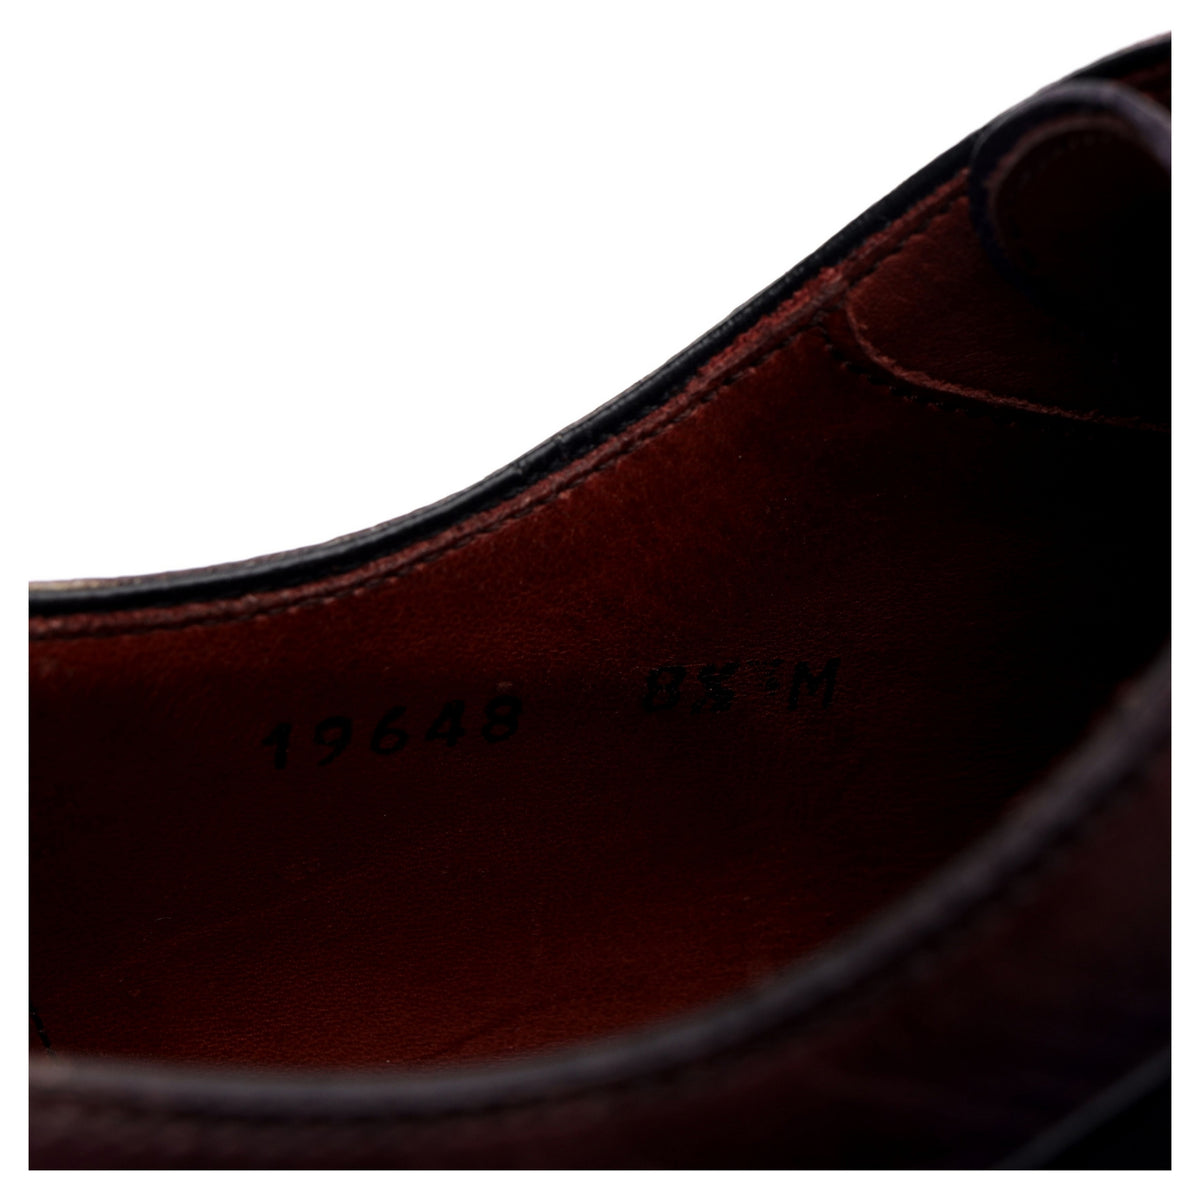 Neiman Marcus Navy Blue Leather Oxford UK 7.5 US 8.5